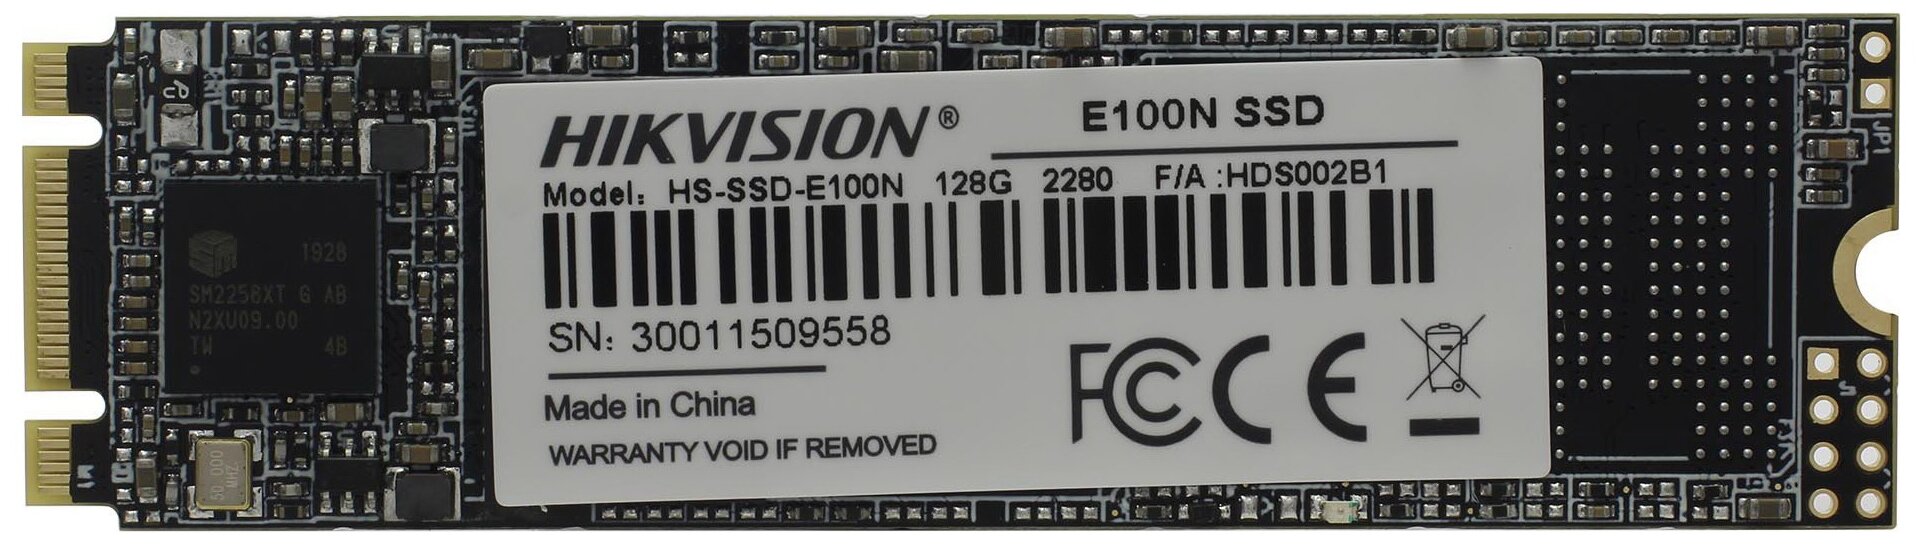 SSD M.2 HIKVision 128GB E100N Series (SATA3, up to 530/450MBs, 3D TLC, 35TBW, 22x80mm)